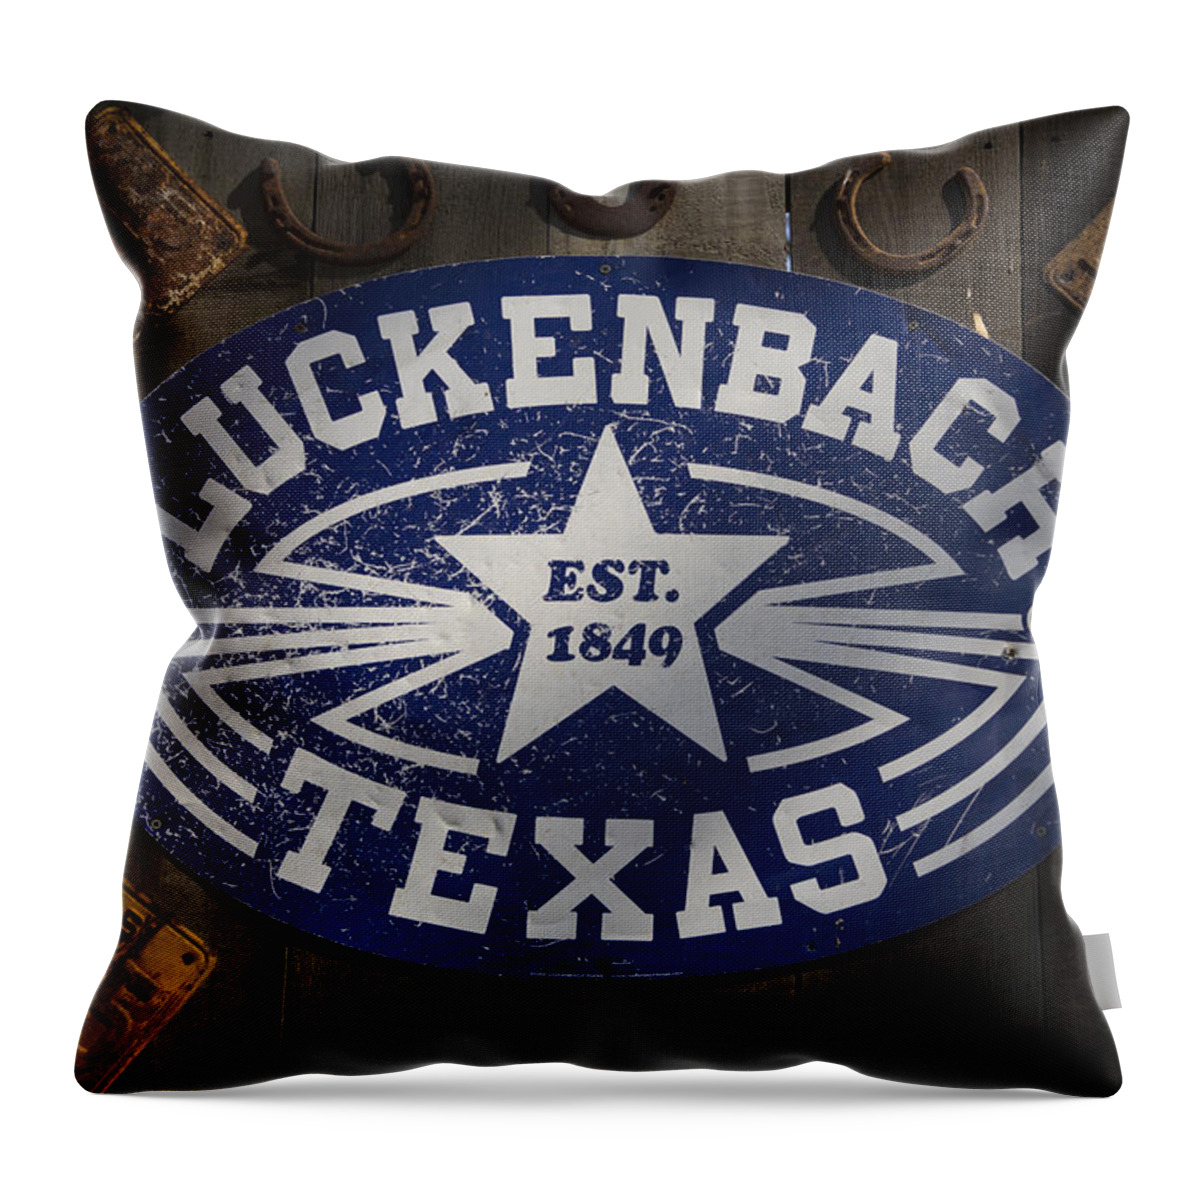 Luckenbach Throw Pillow featuring the photograph Luckenbach Texas by Stephen Stookey